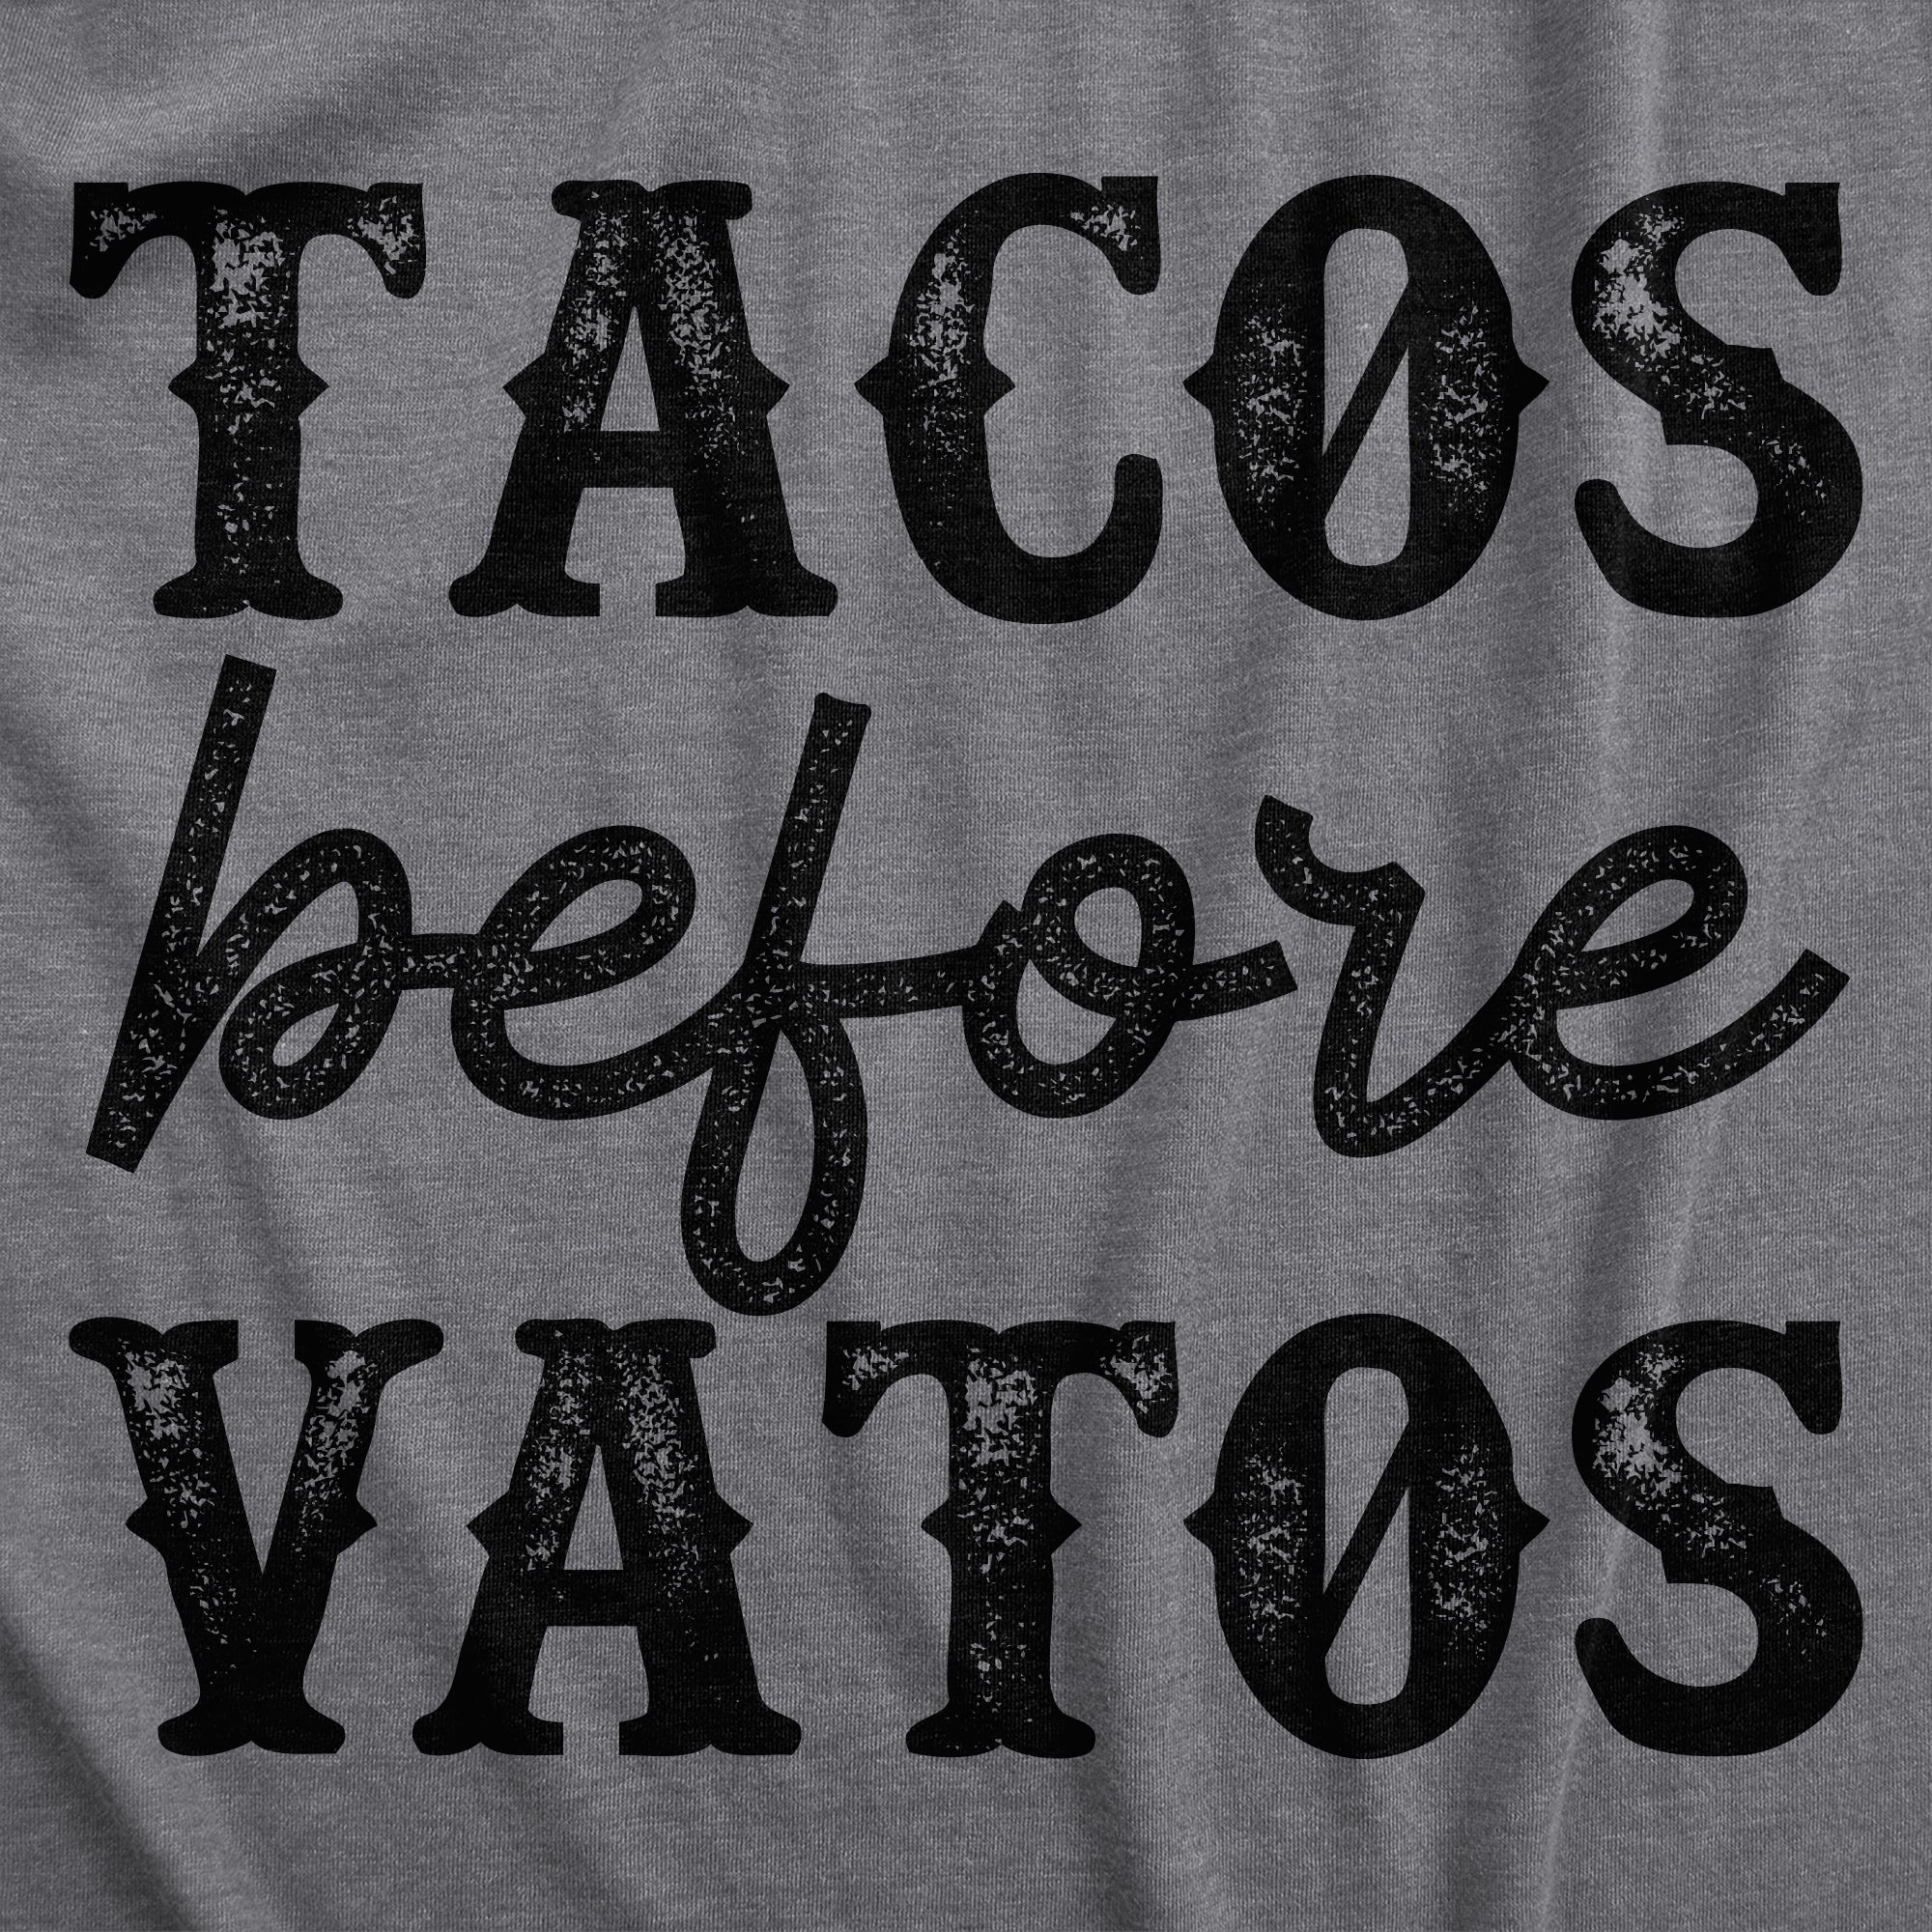 Funny Dark Heather Grey - TACOS Tacos Before Vatos Womens T Shirt Nerdy food sarcastic Tee